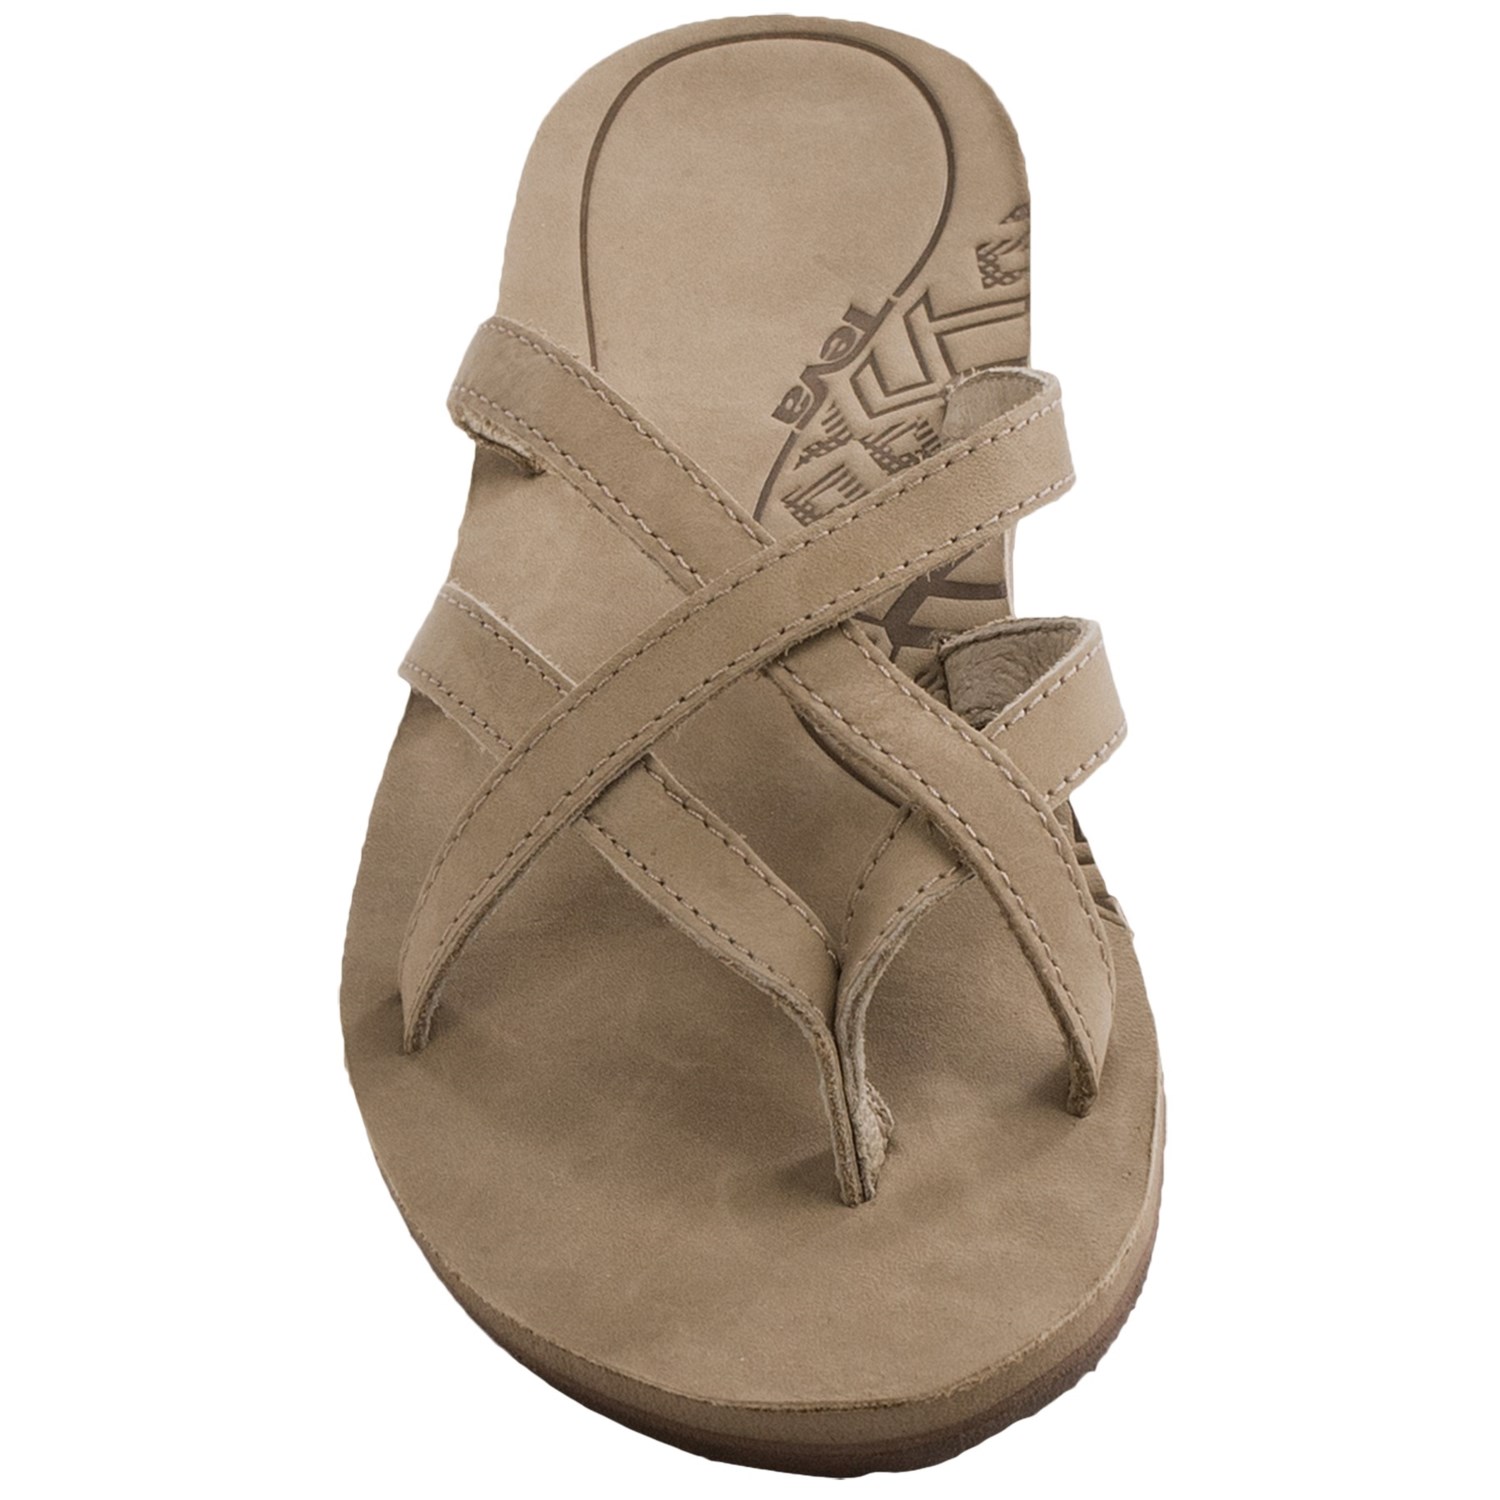 Teva Olowahu Sandals (For Women) 7859N - Save 74%